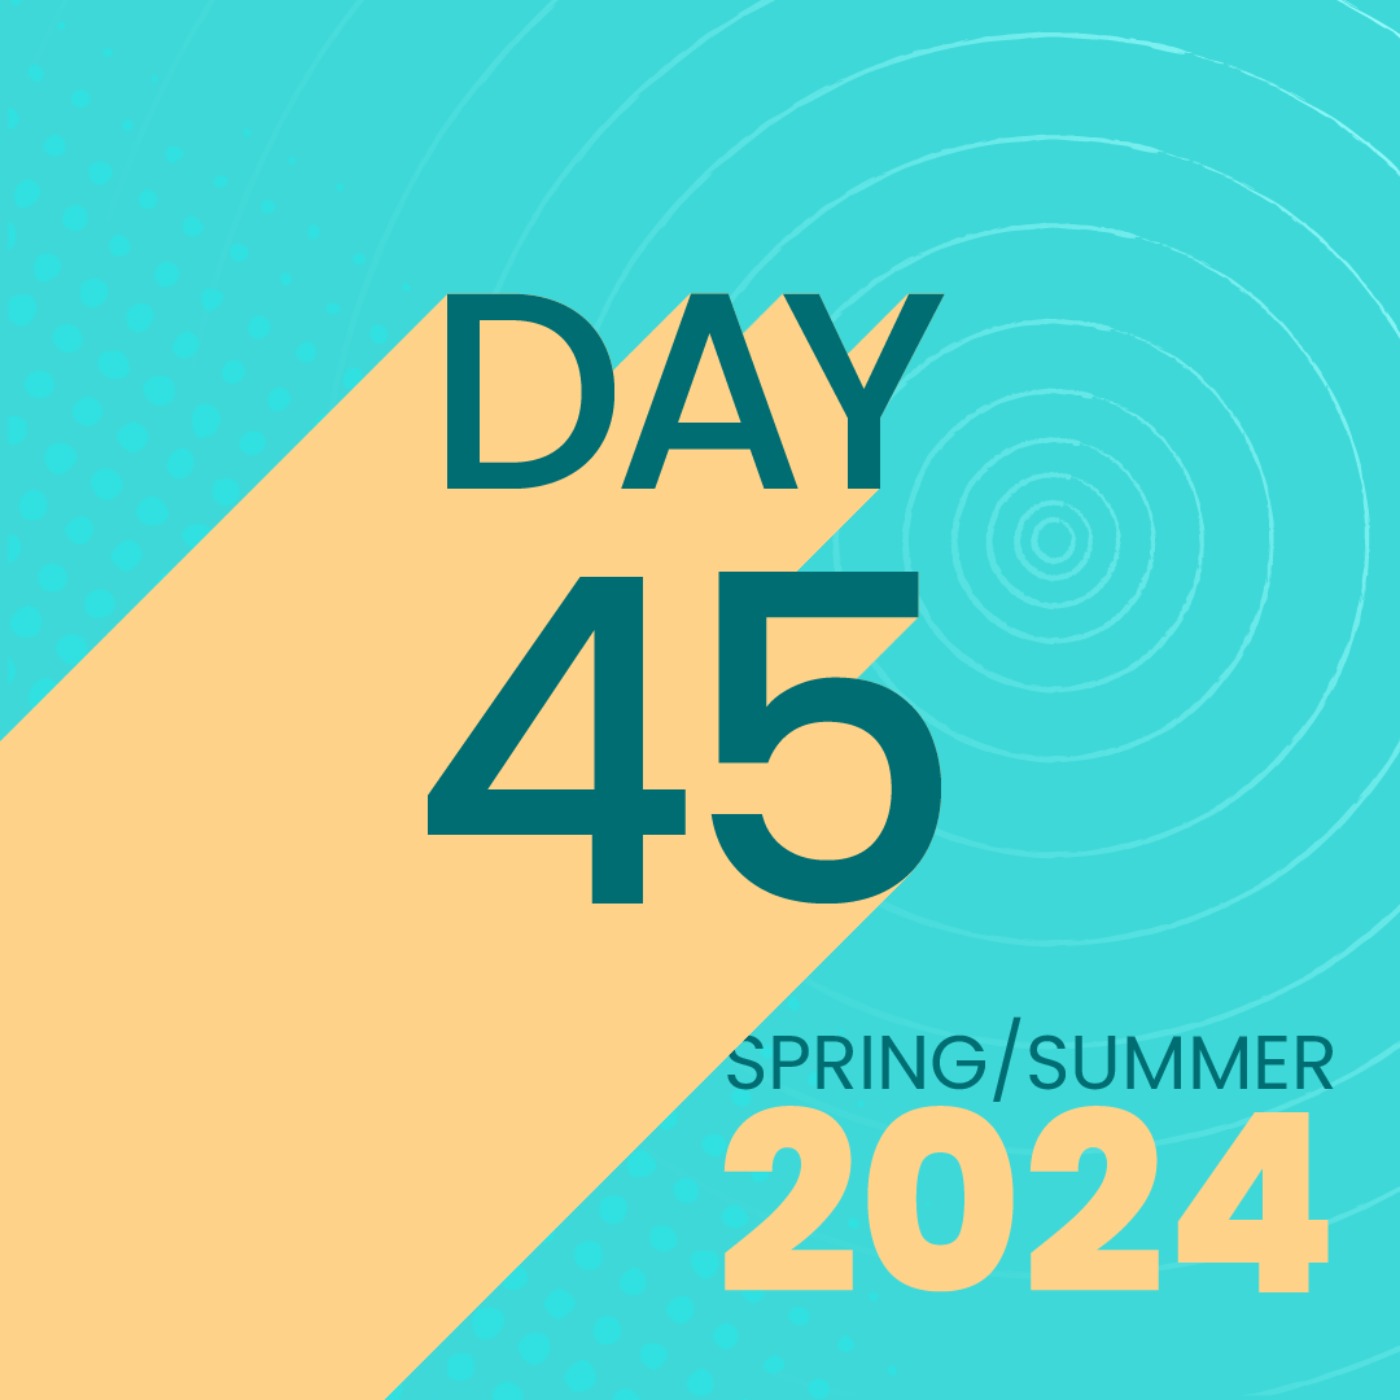 Livy Method Day 45 - Spring/Summer 2024